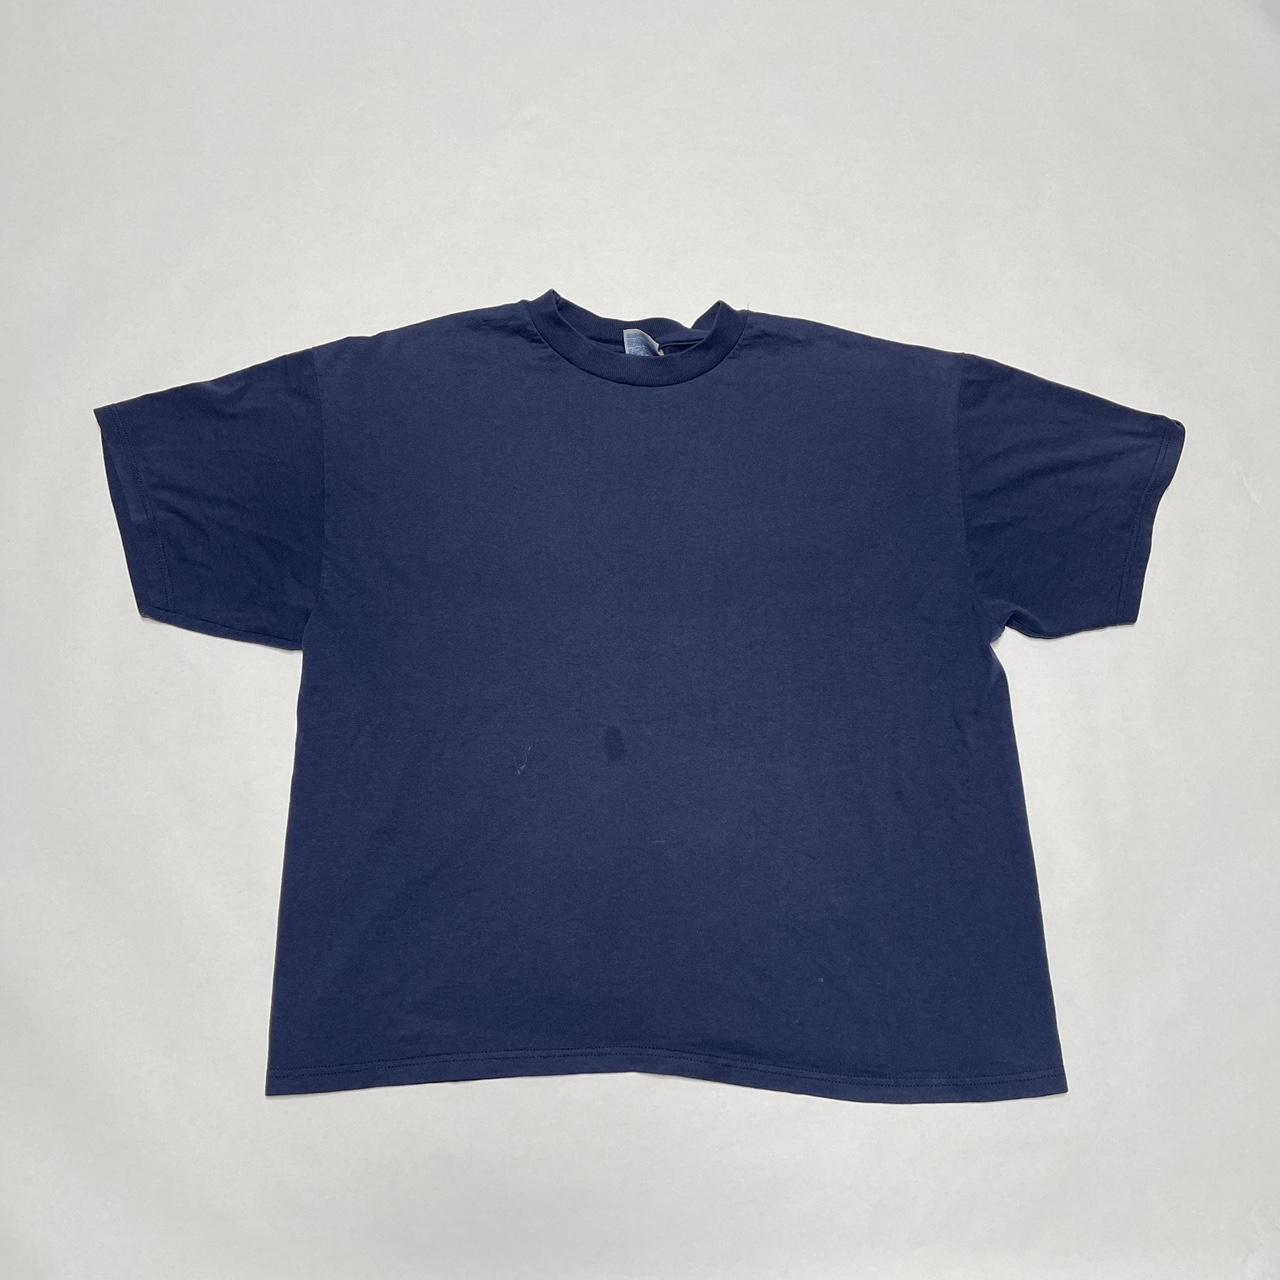 Super Sick Vintage 90s Blank T-Shirt (XL) No damage... - Depop